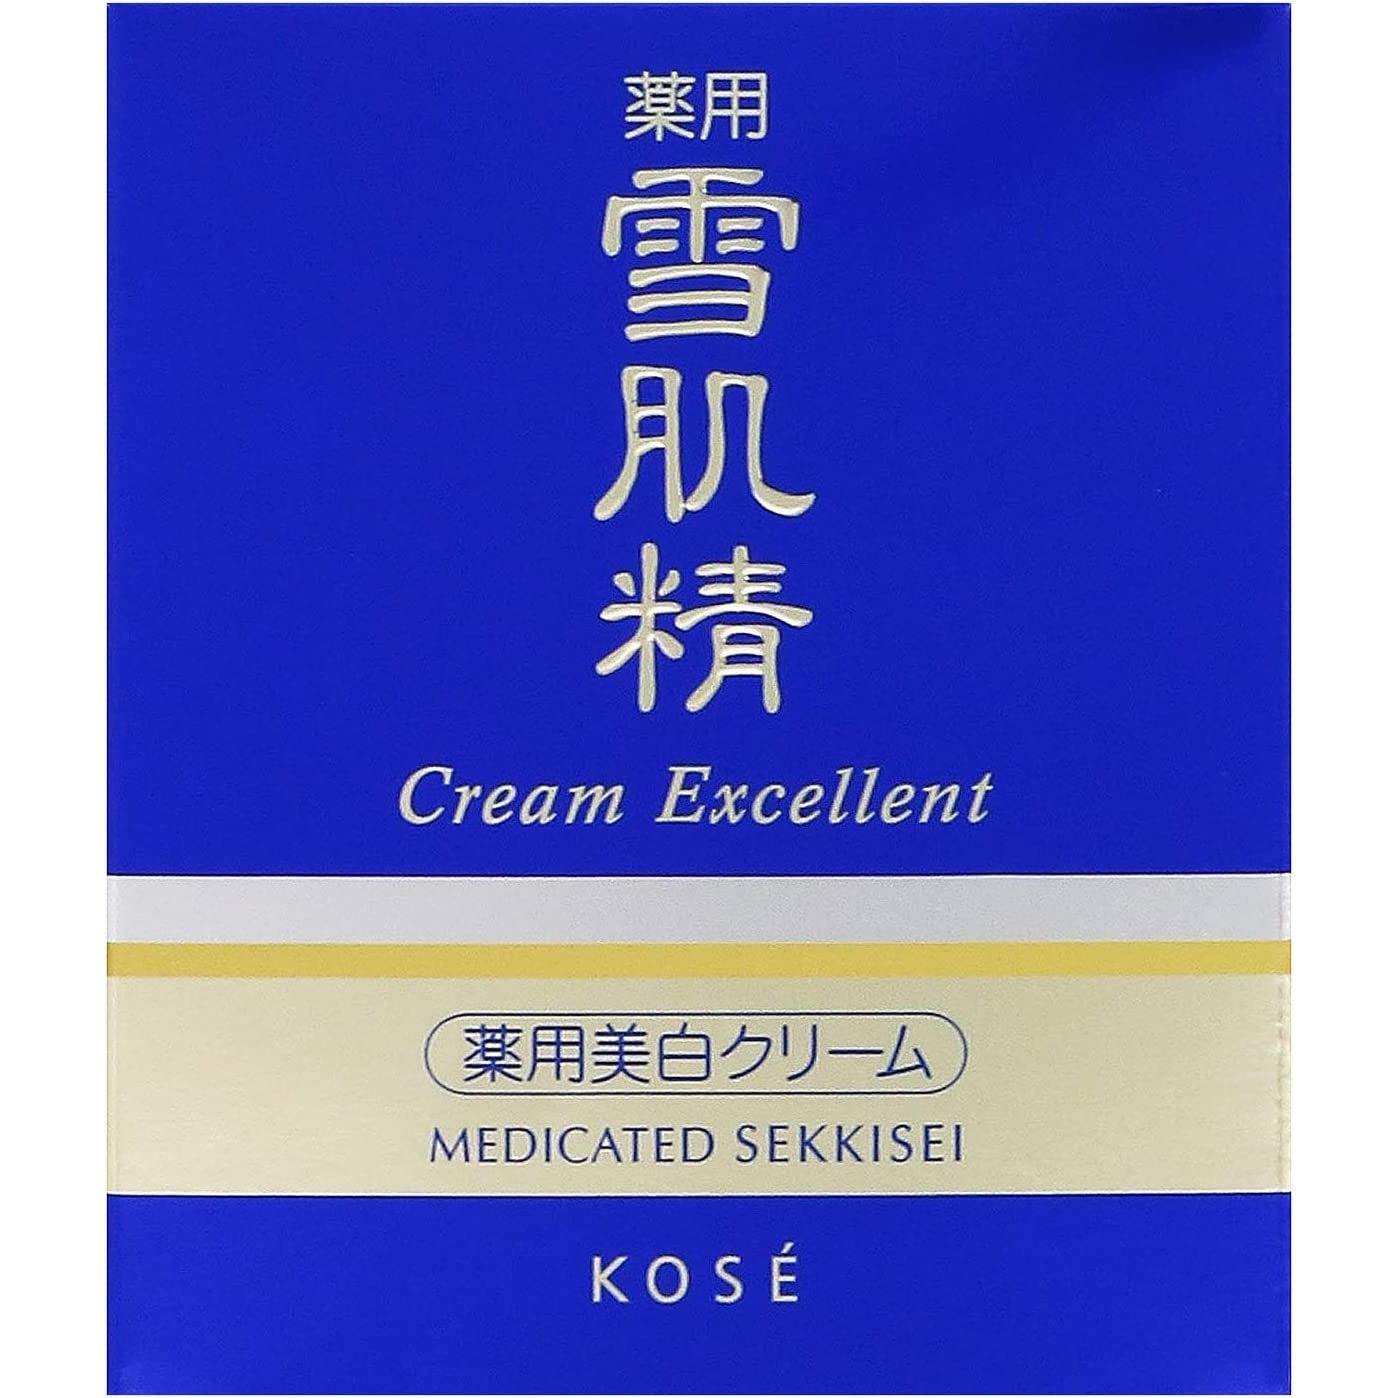 Kose Sekkisei Cream Excellent Spot Treatment Moisturizing Cream 50g